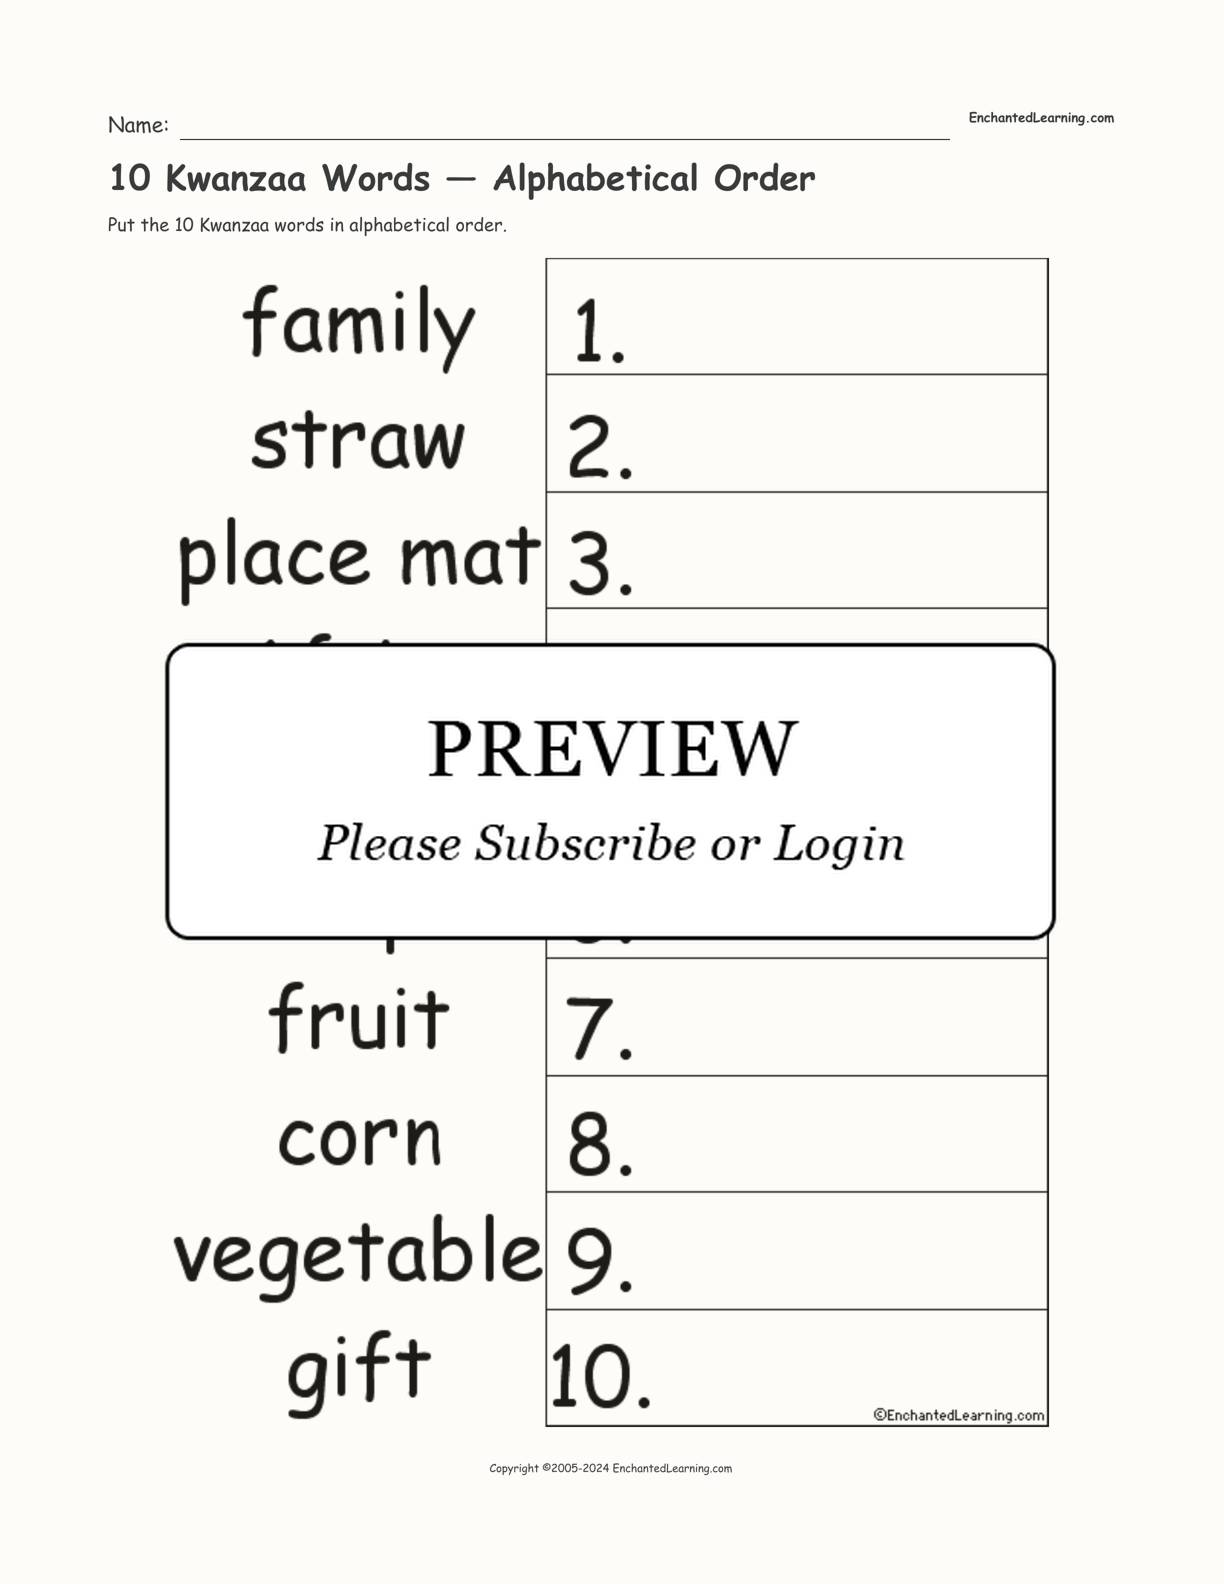 10 Kwanzaa Words — Alphabetical Order interactive worksheet page 1